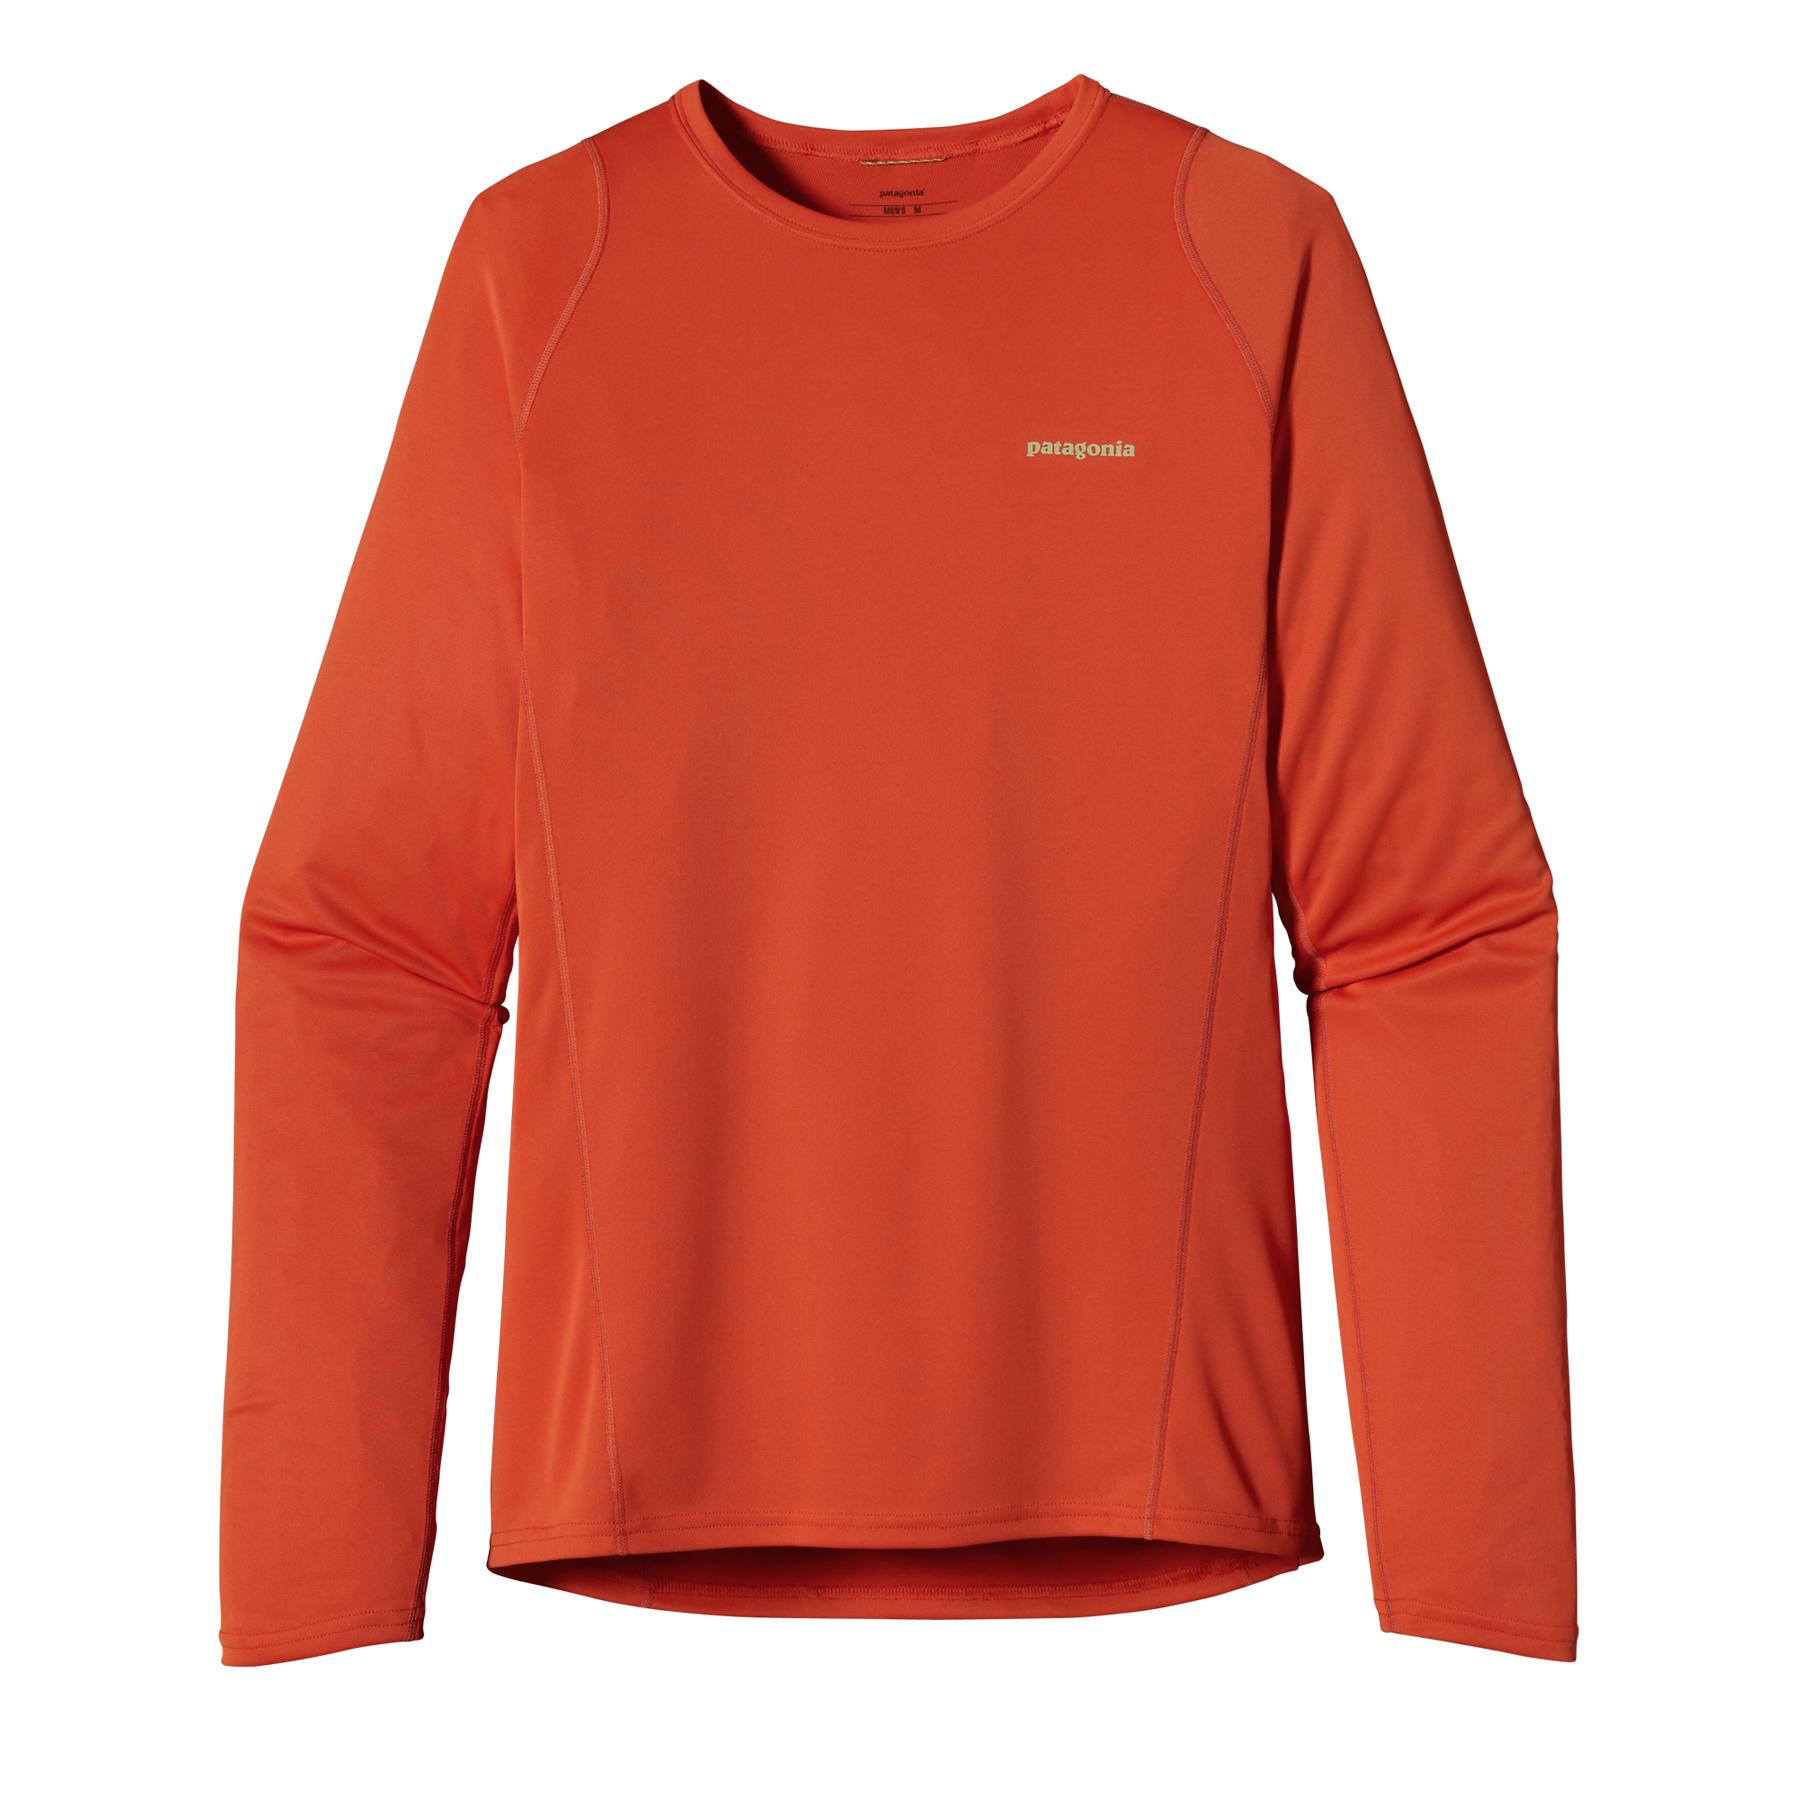 Foto Patagonia L/S Fore Runner Shirt Men Eclectic Orange (Modell 2013/2014)